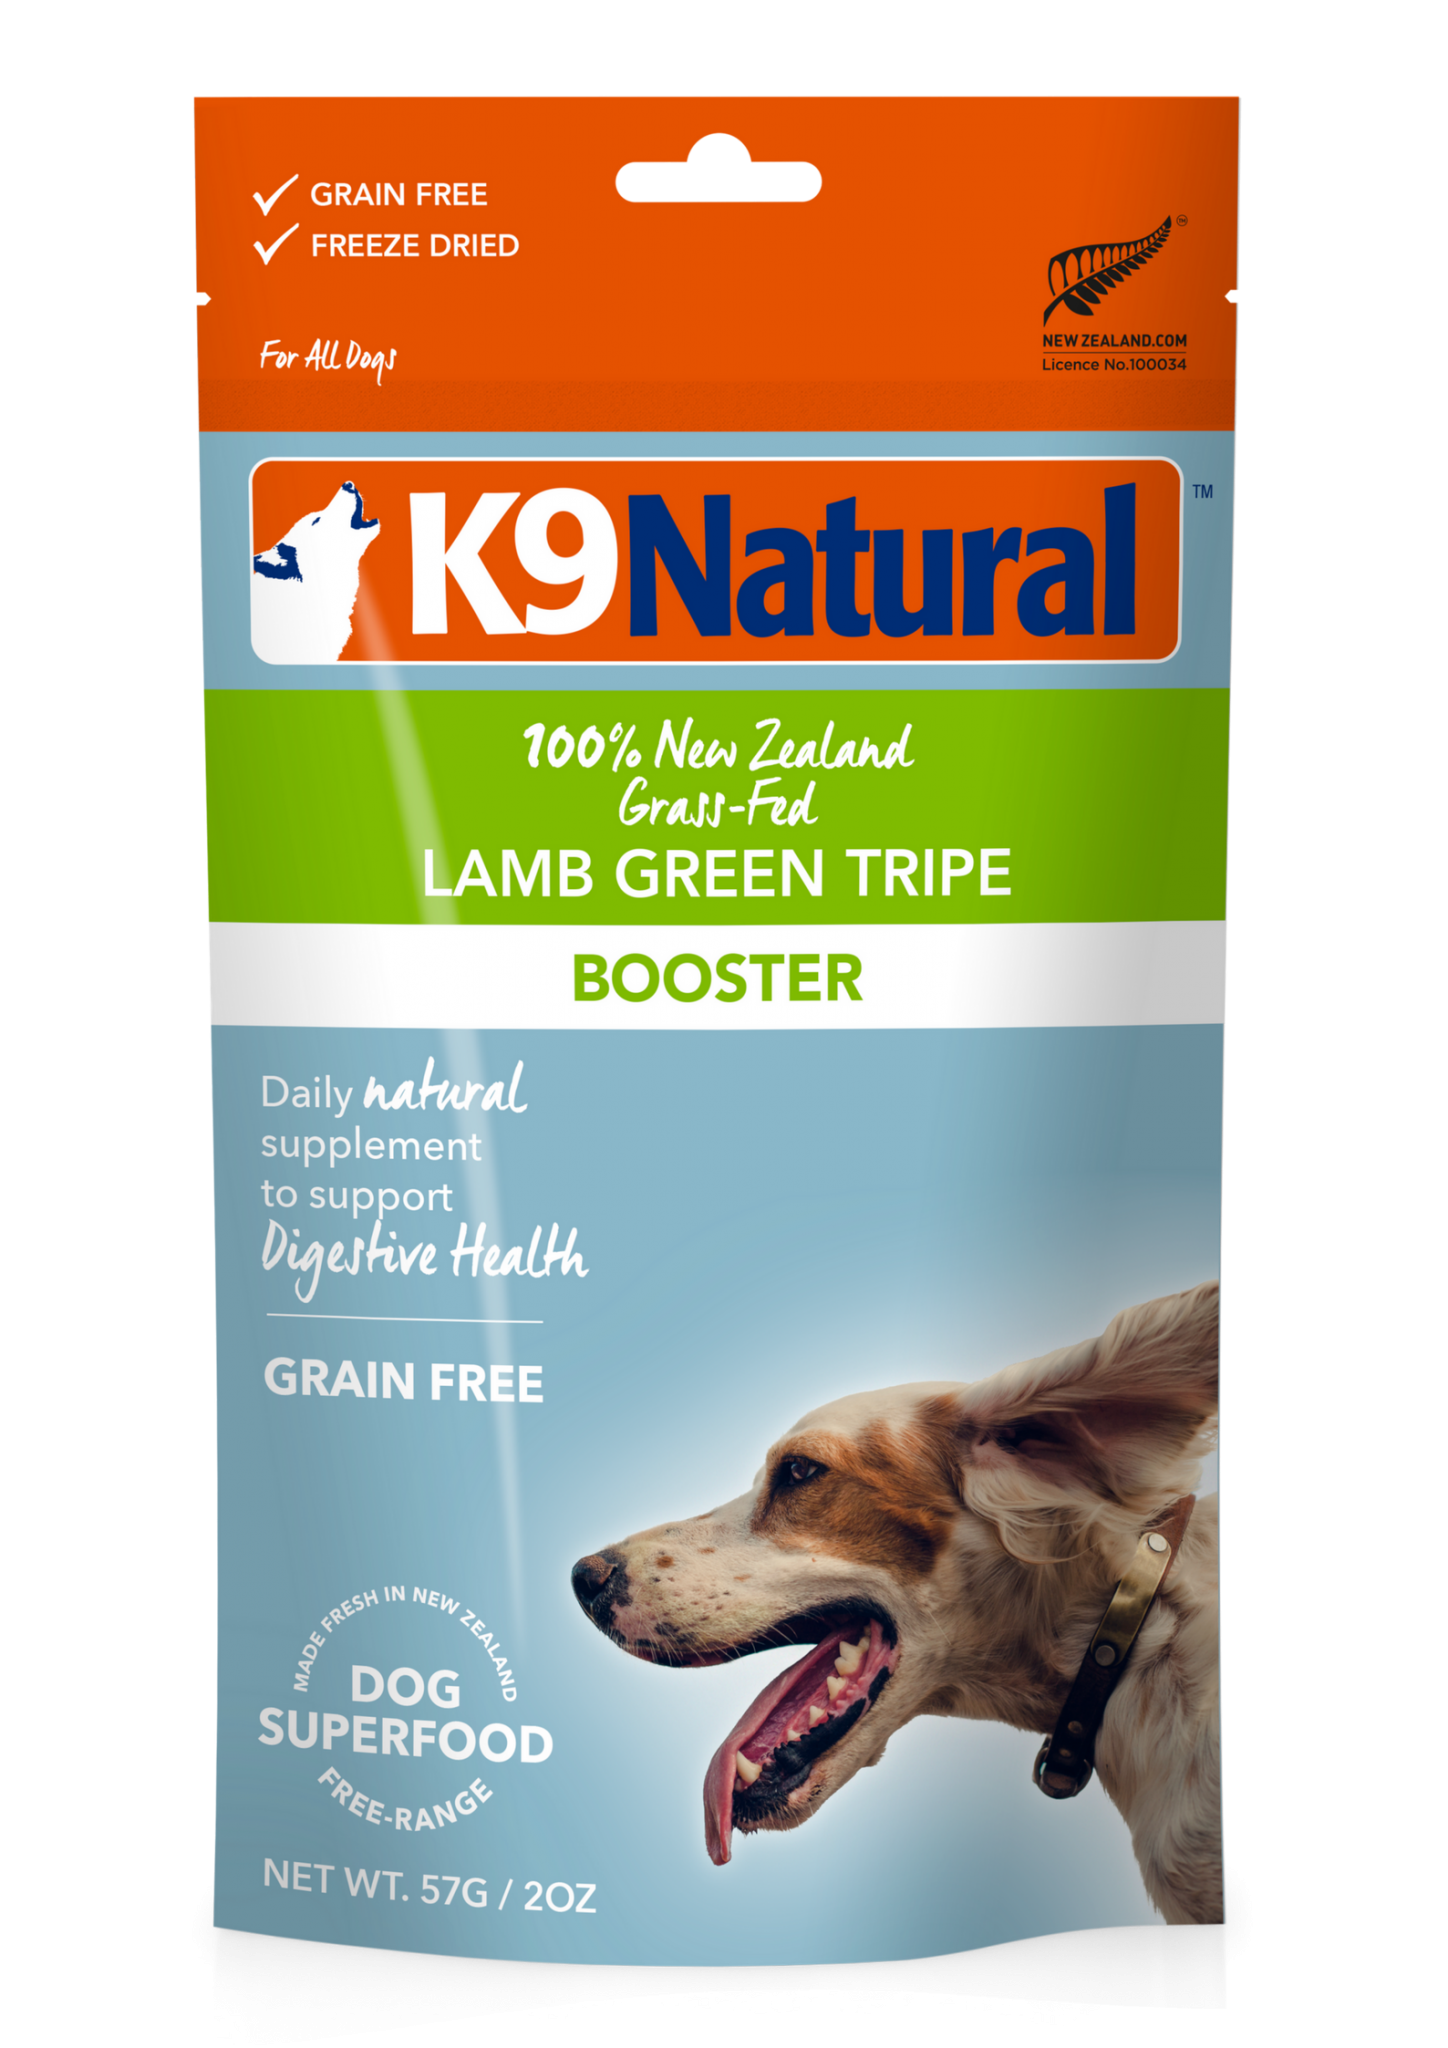 K9 Natural Lamb Green Tripe Booster 200g